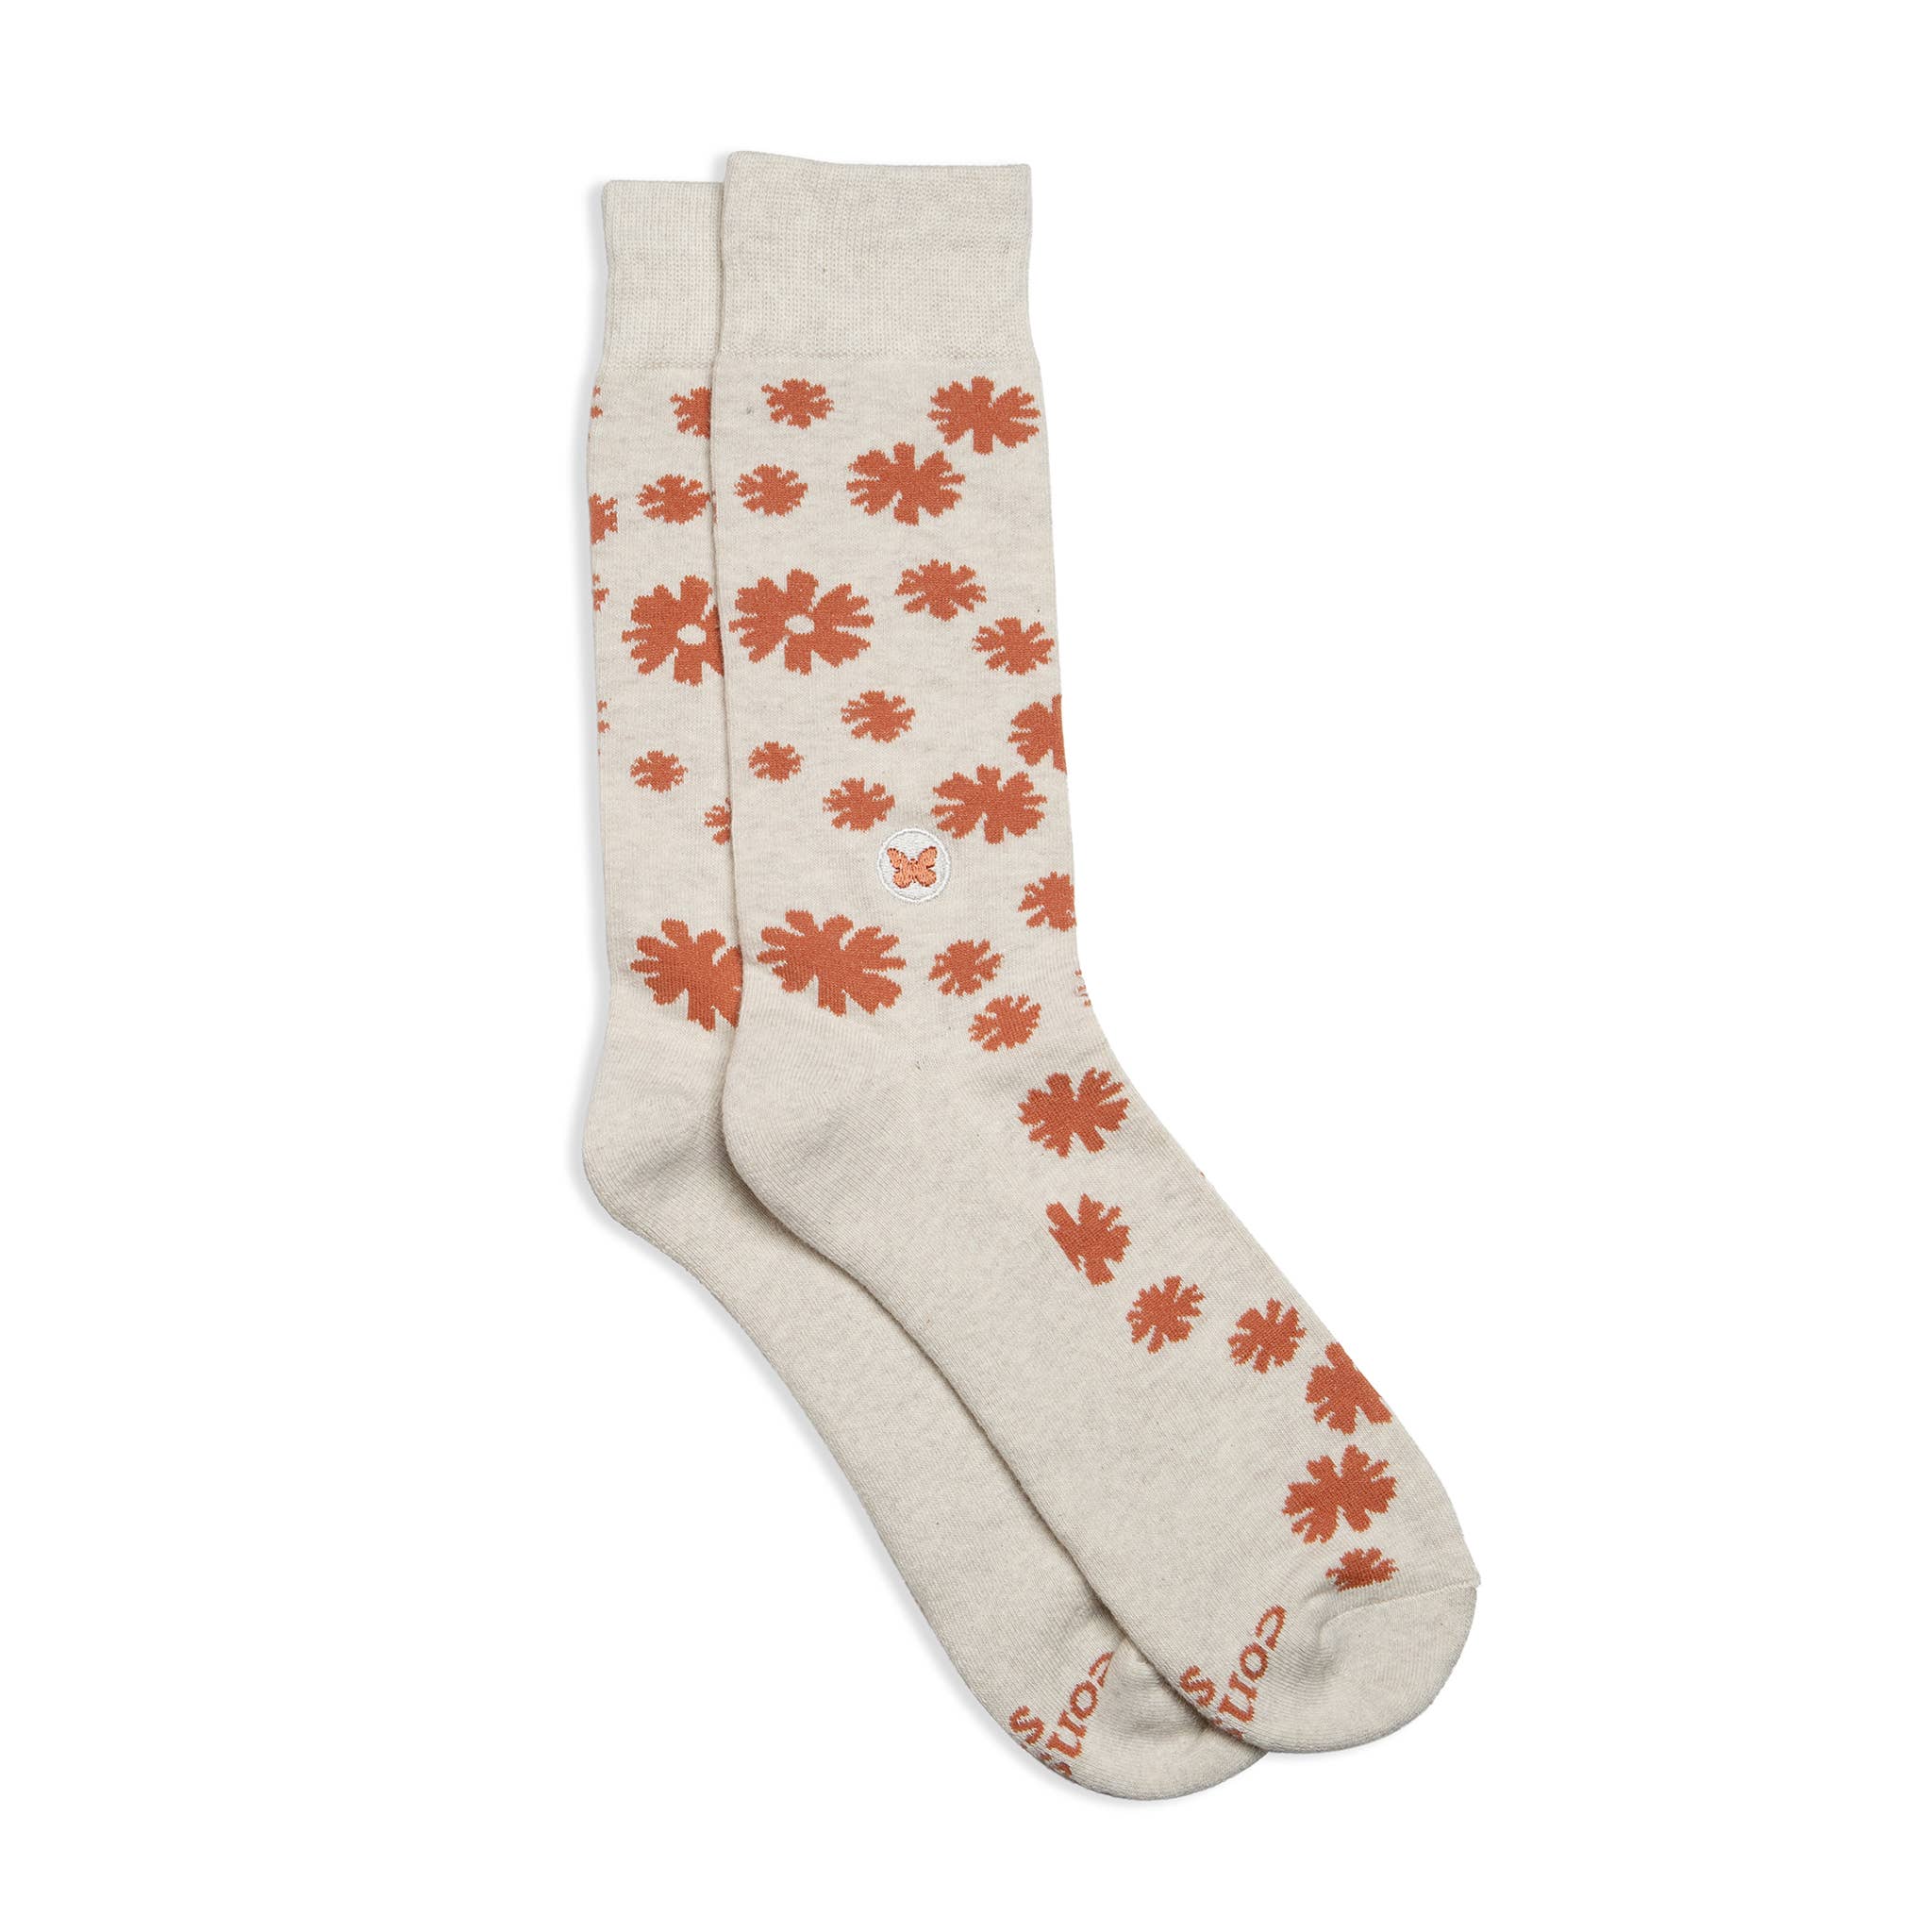 Conscious Step - Socks that Stop Violence Against Women (Orange Flowers)